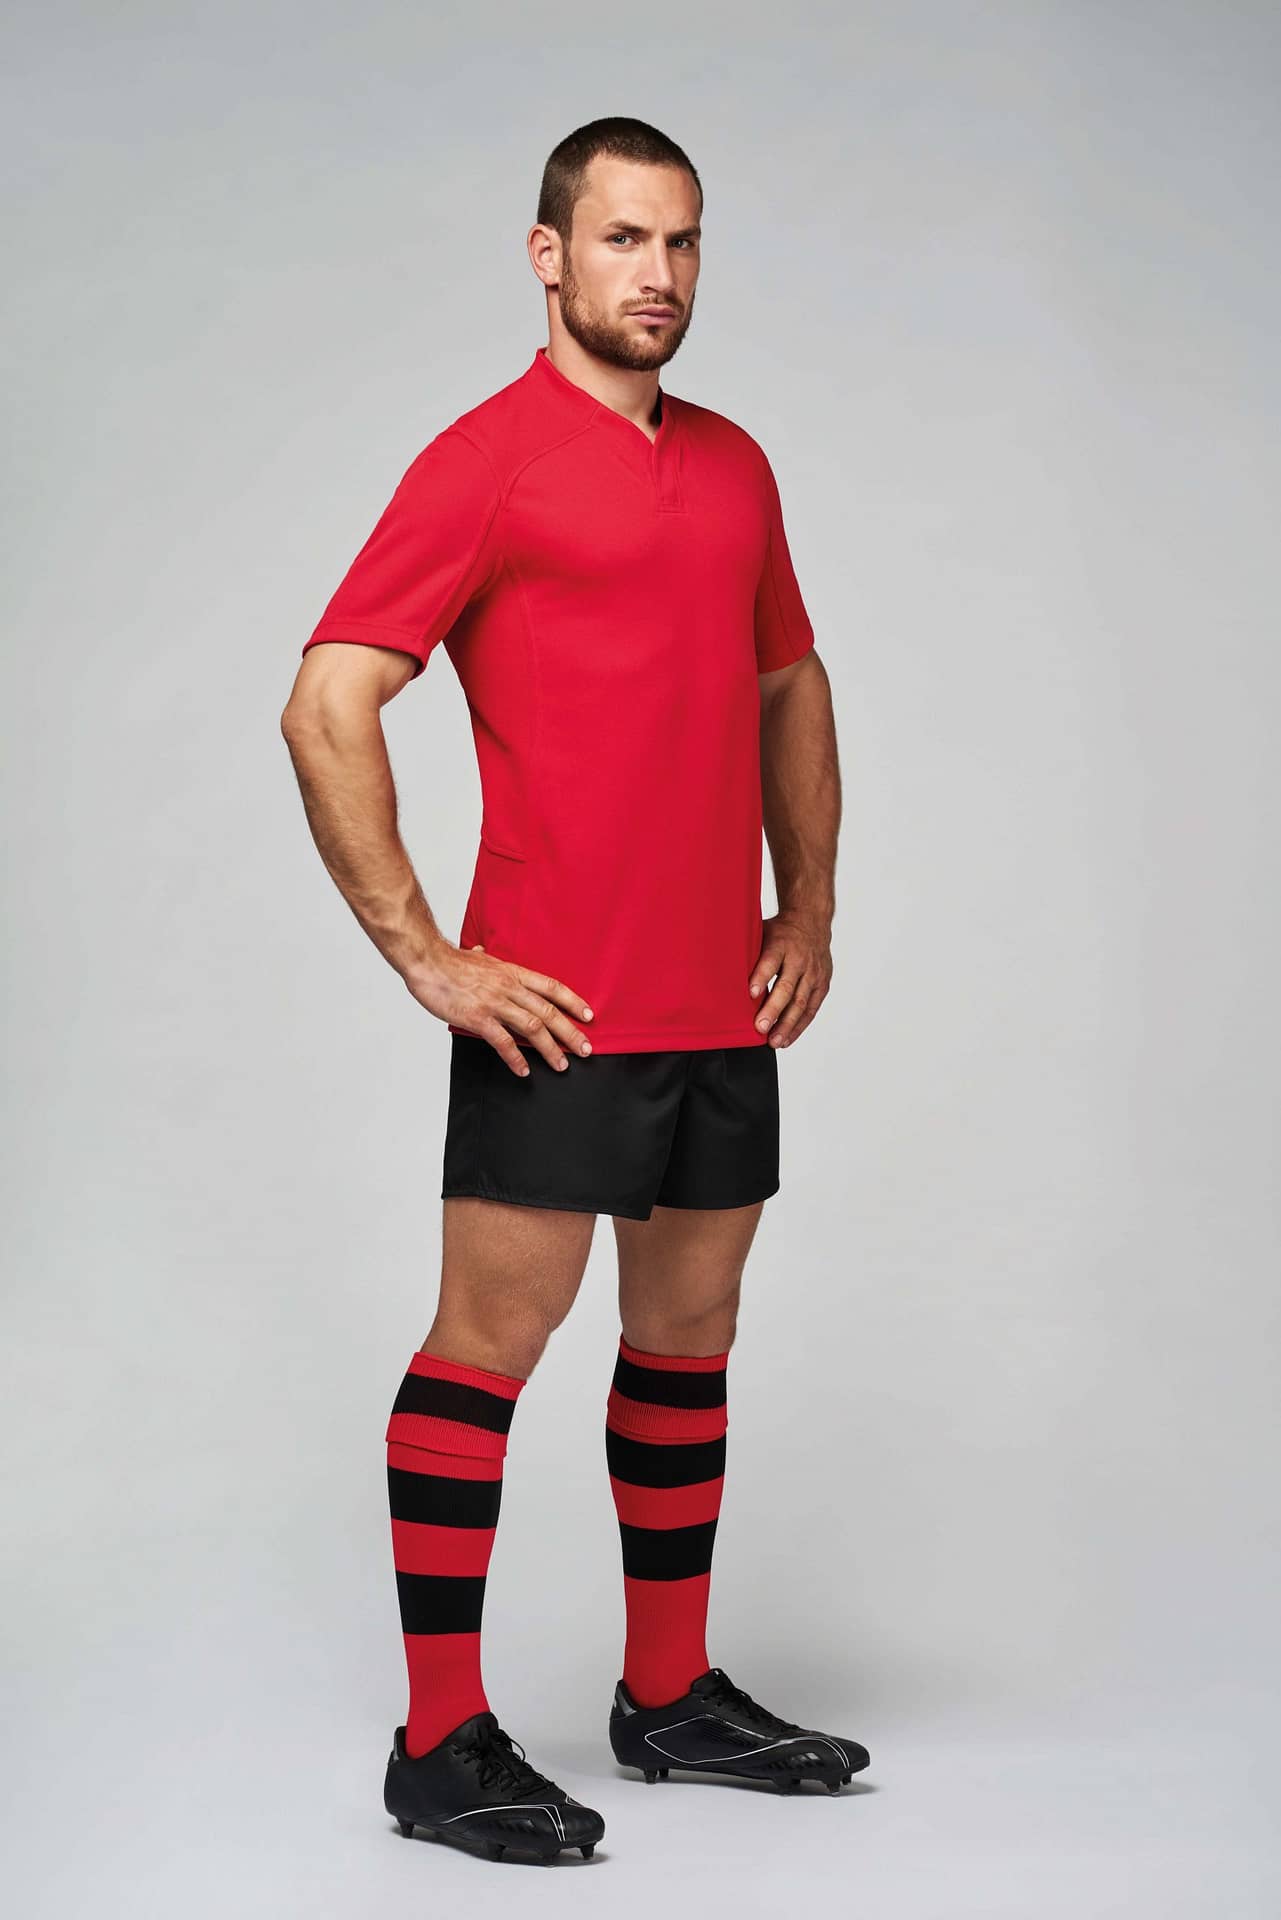 Rugby Shorts Unisex